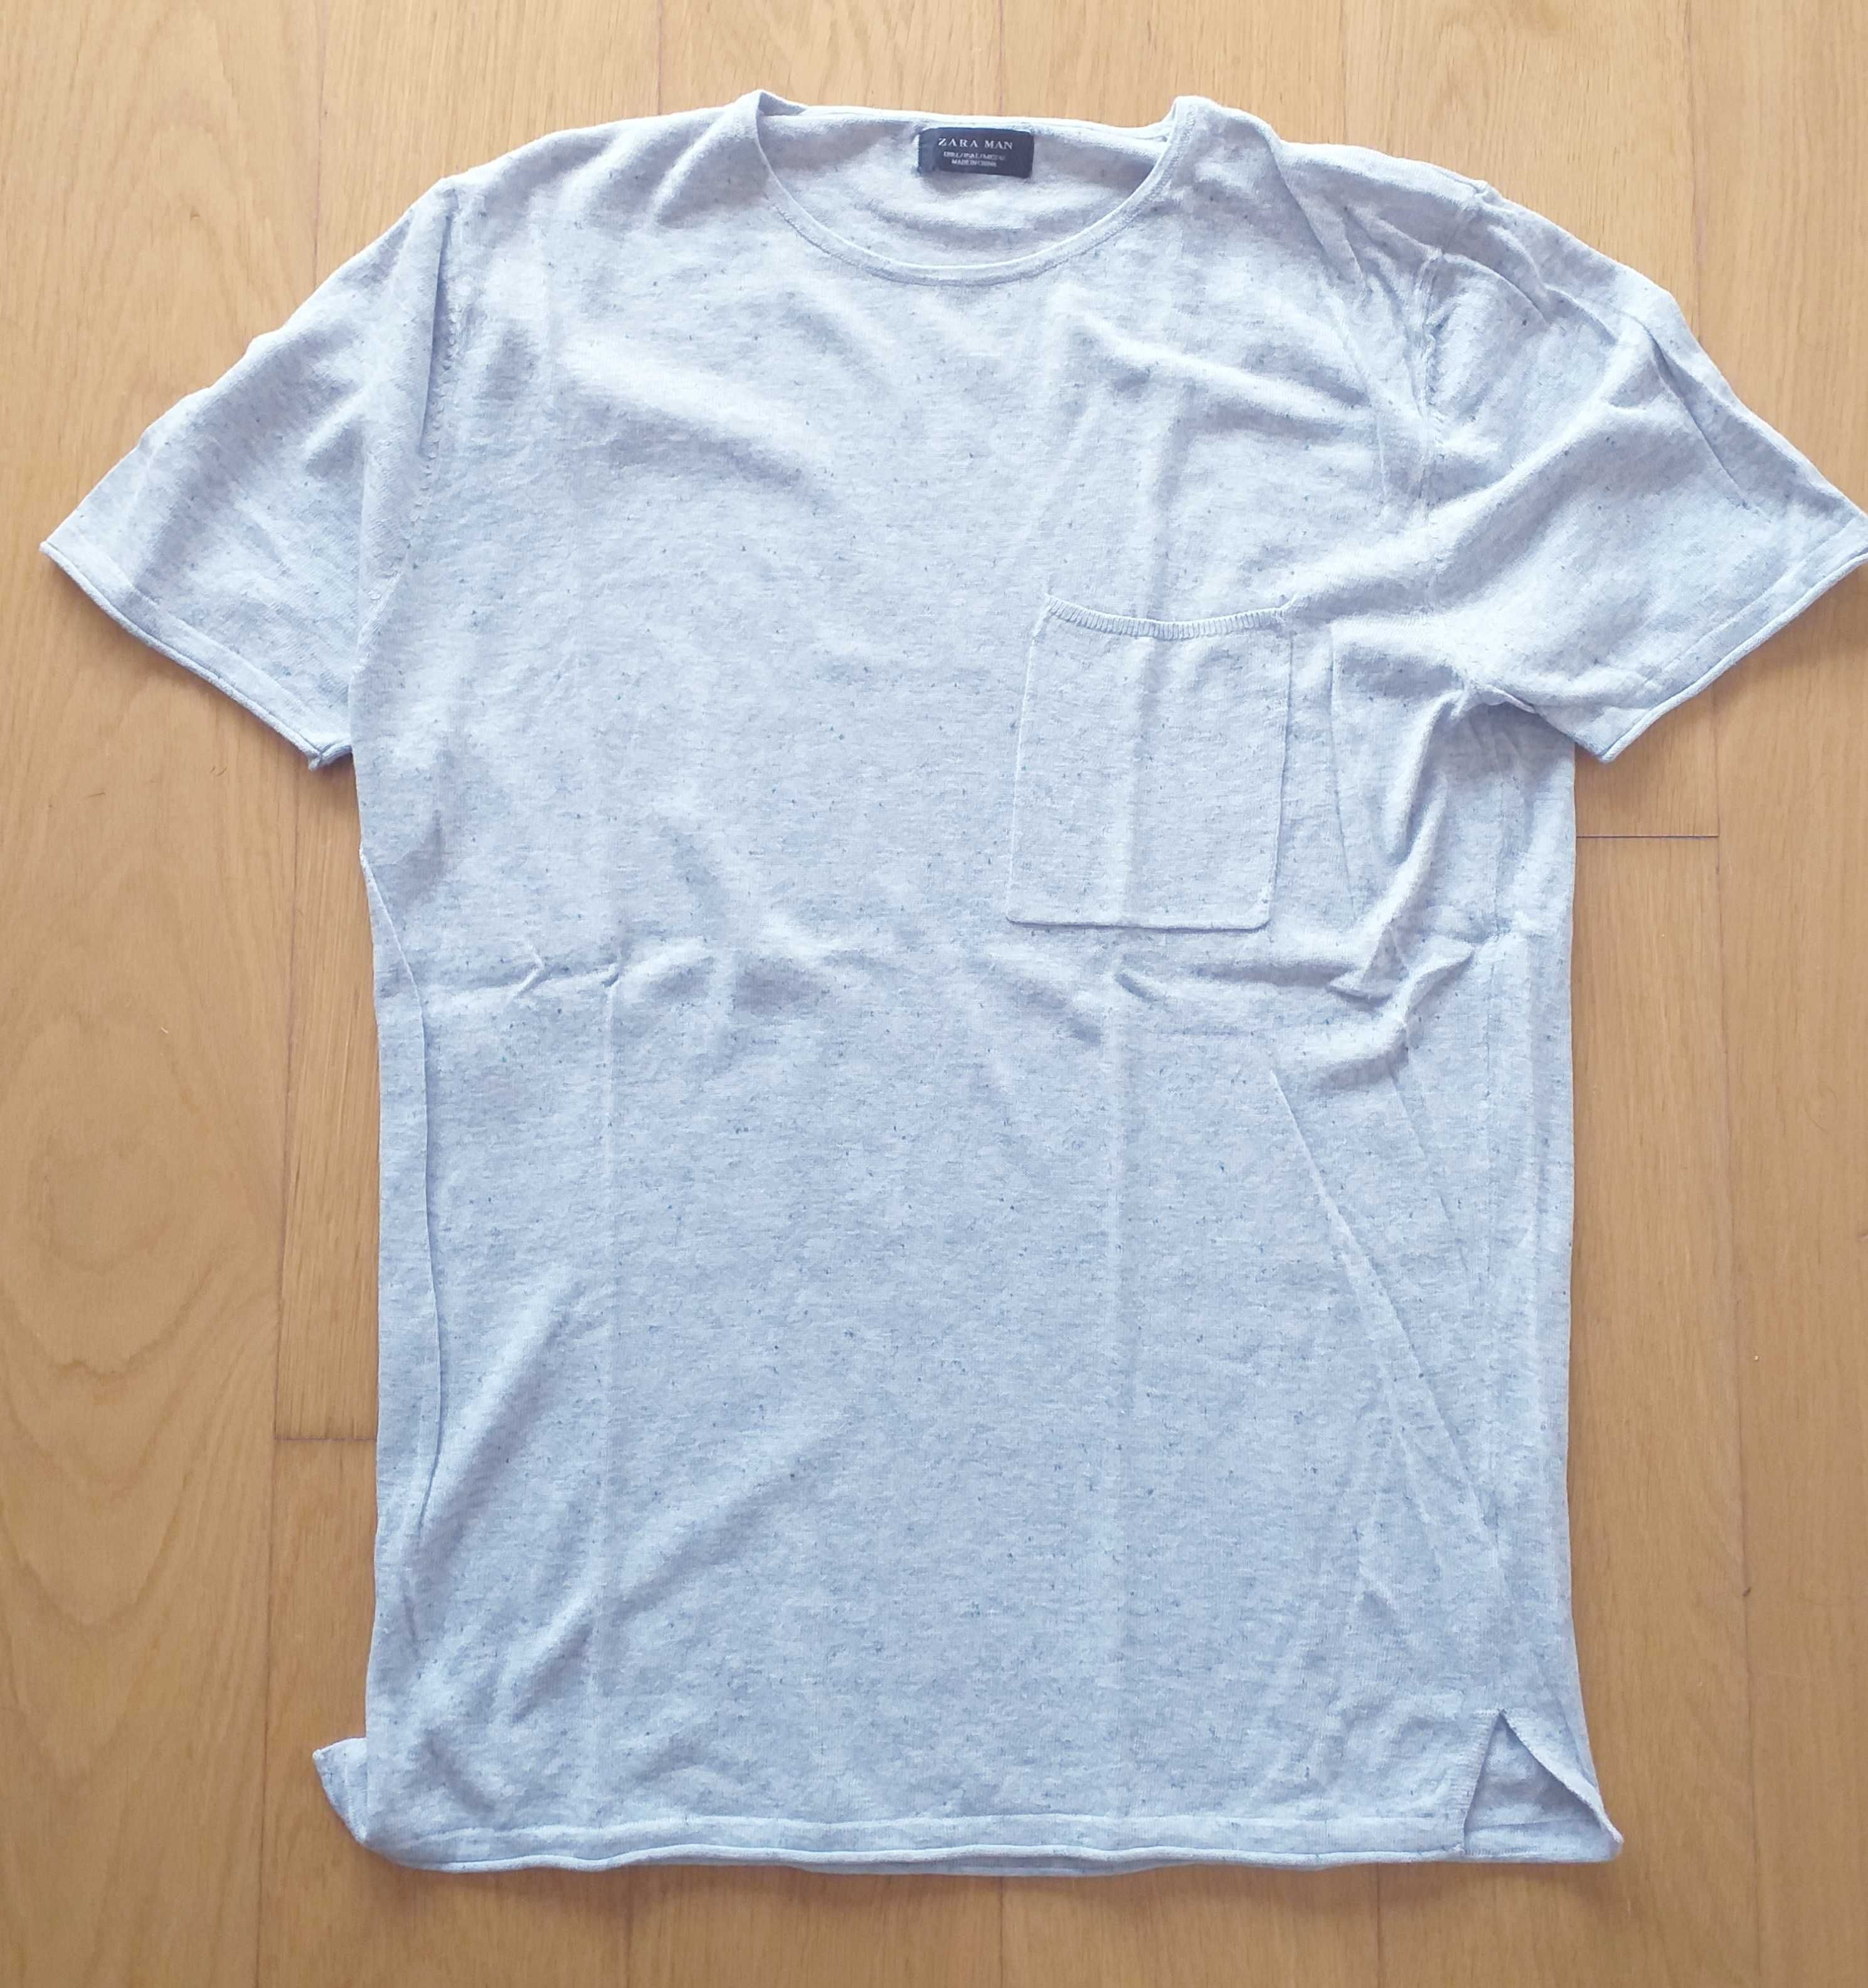 T-shirt Zara cinza claro, original, nova